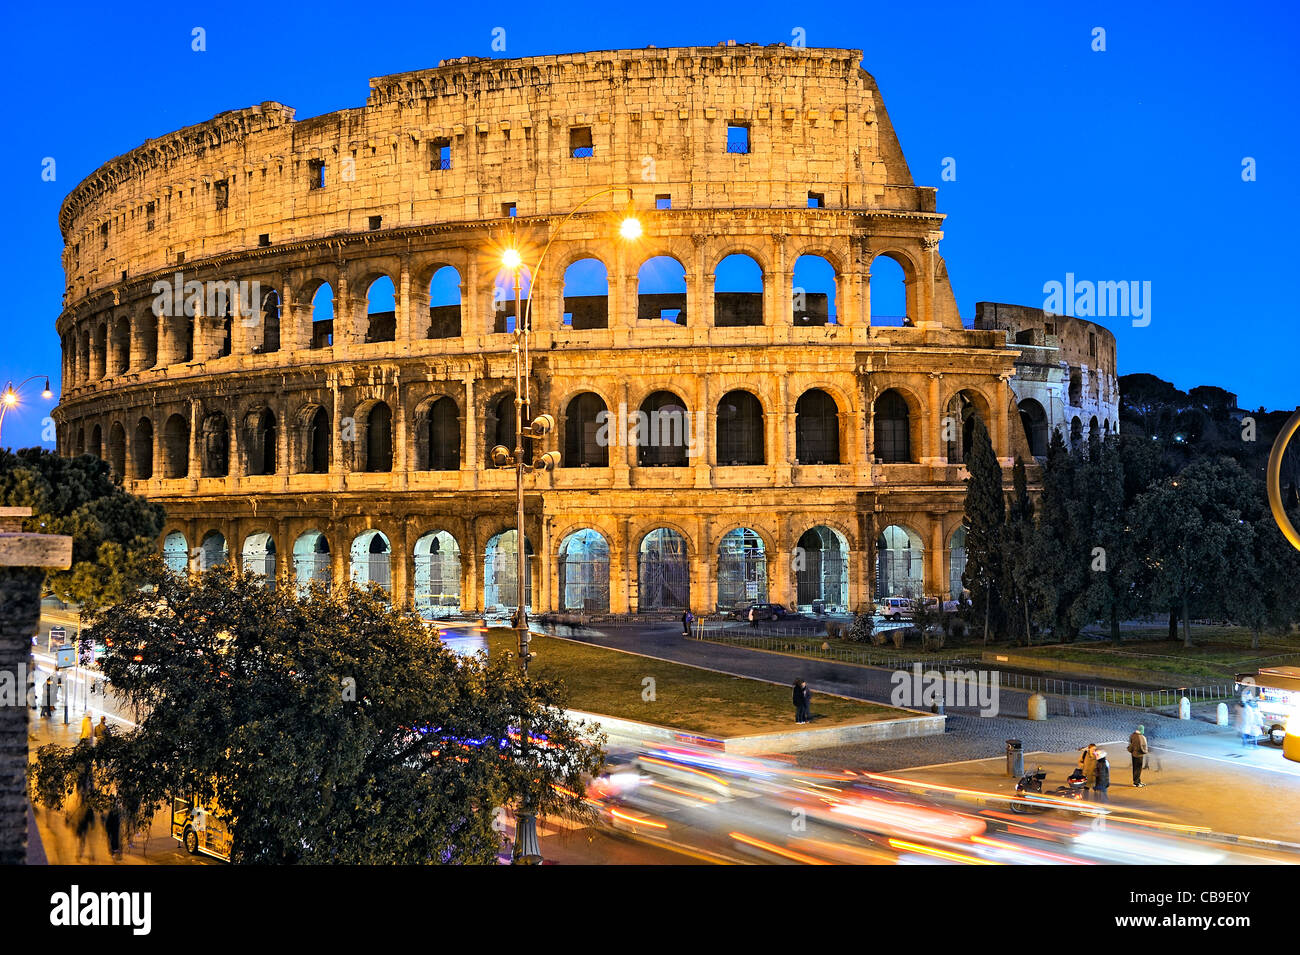 Al atardecer, el Coliseo de Roma, Italia. Foto de stock